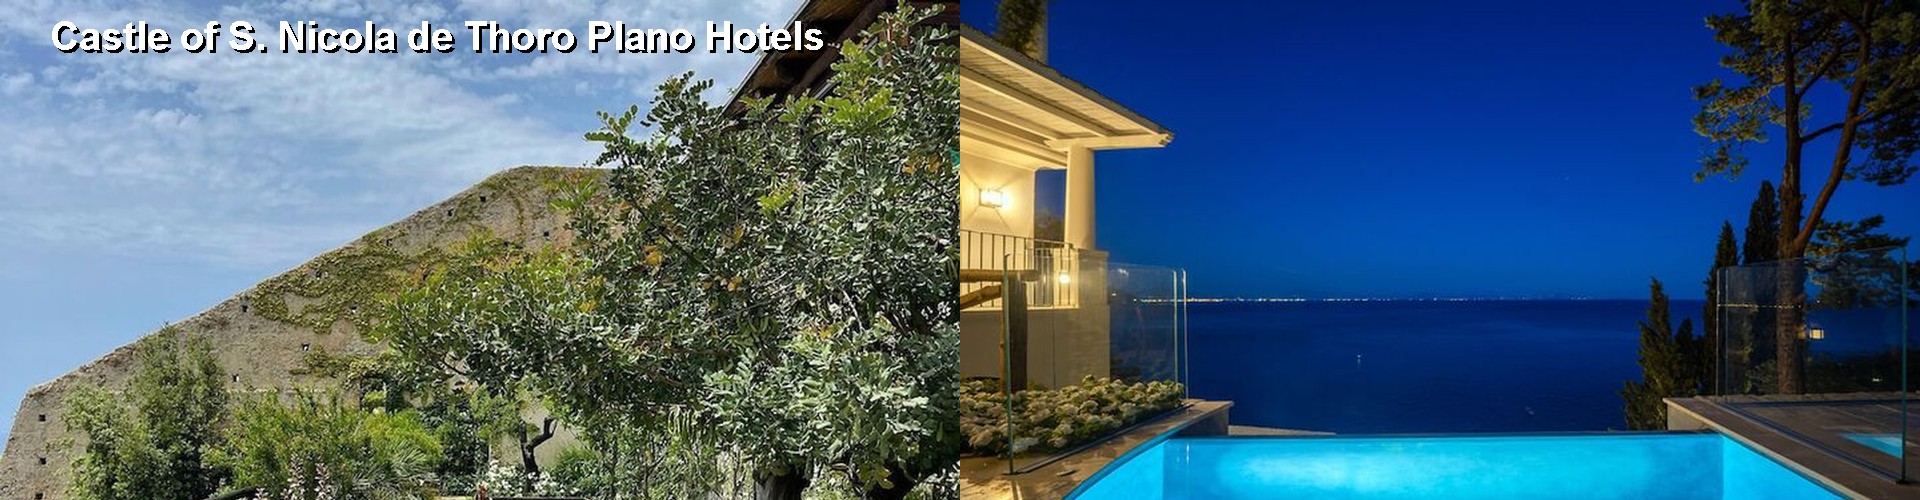 5 Best Hotels near Castle of S. Nicola de Thoro Plano